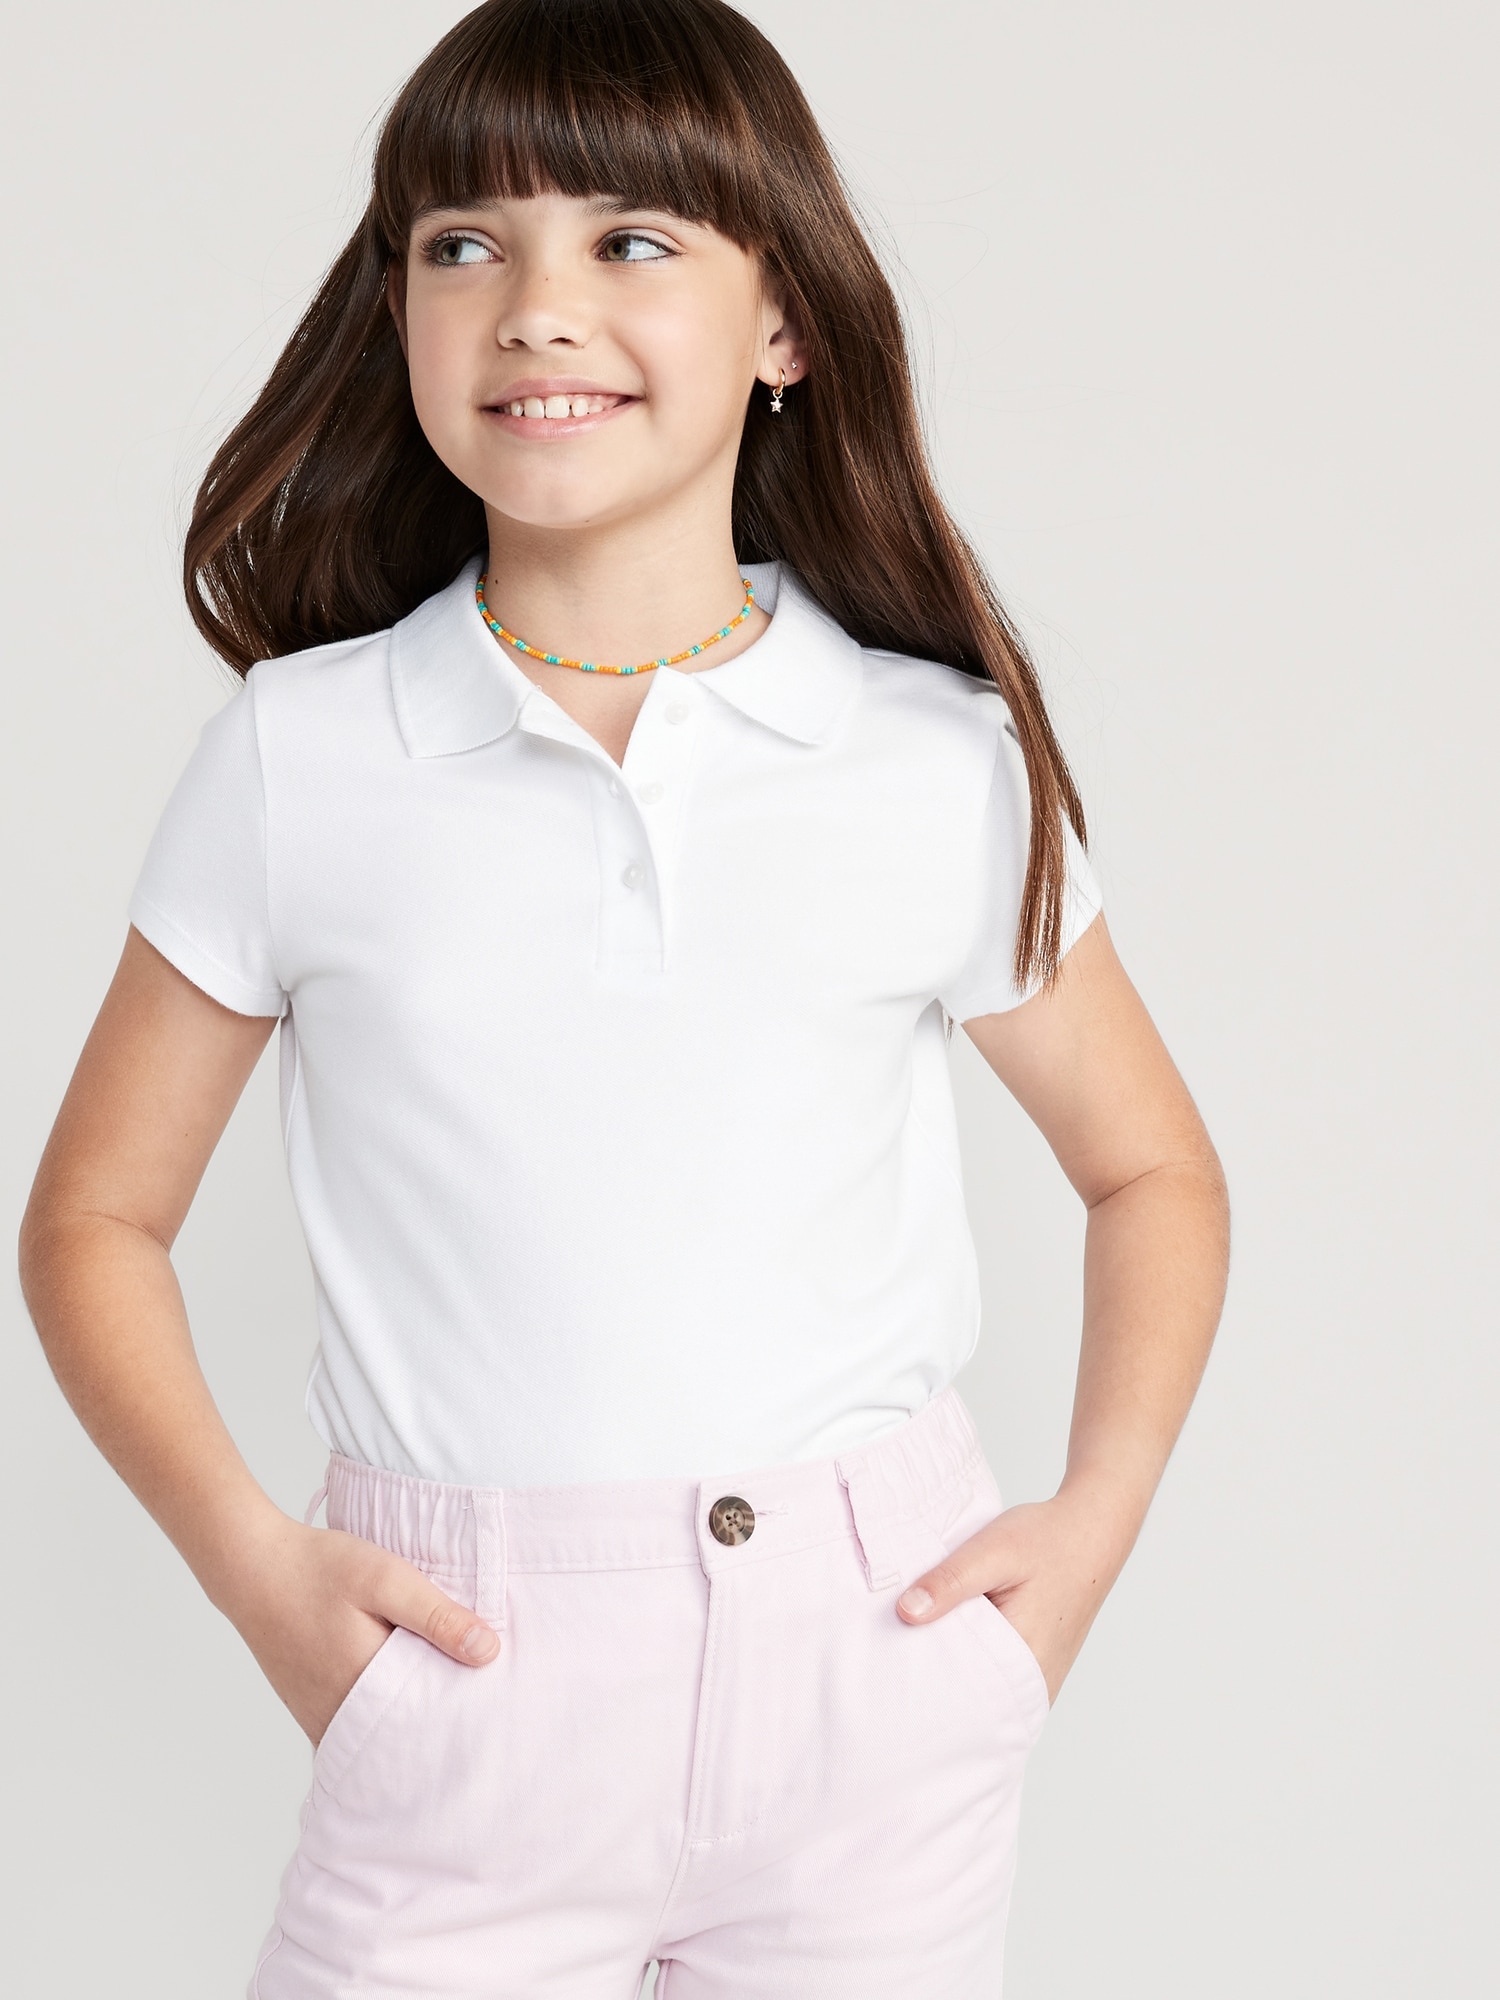 Uniform Pique Polo Shirt for Girls | Old Navy